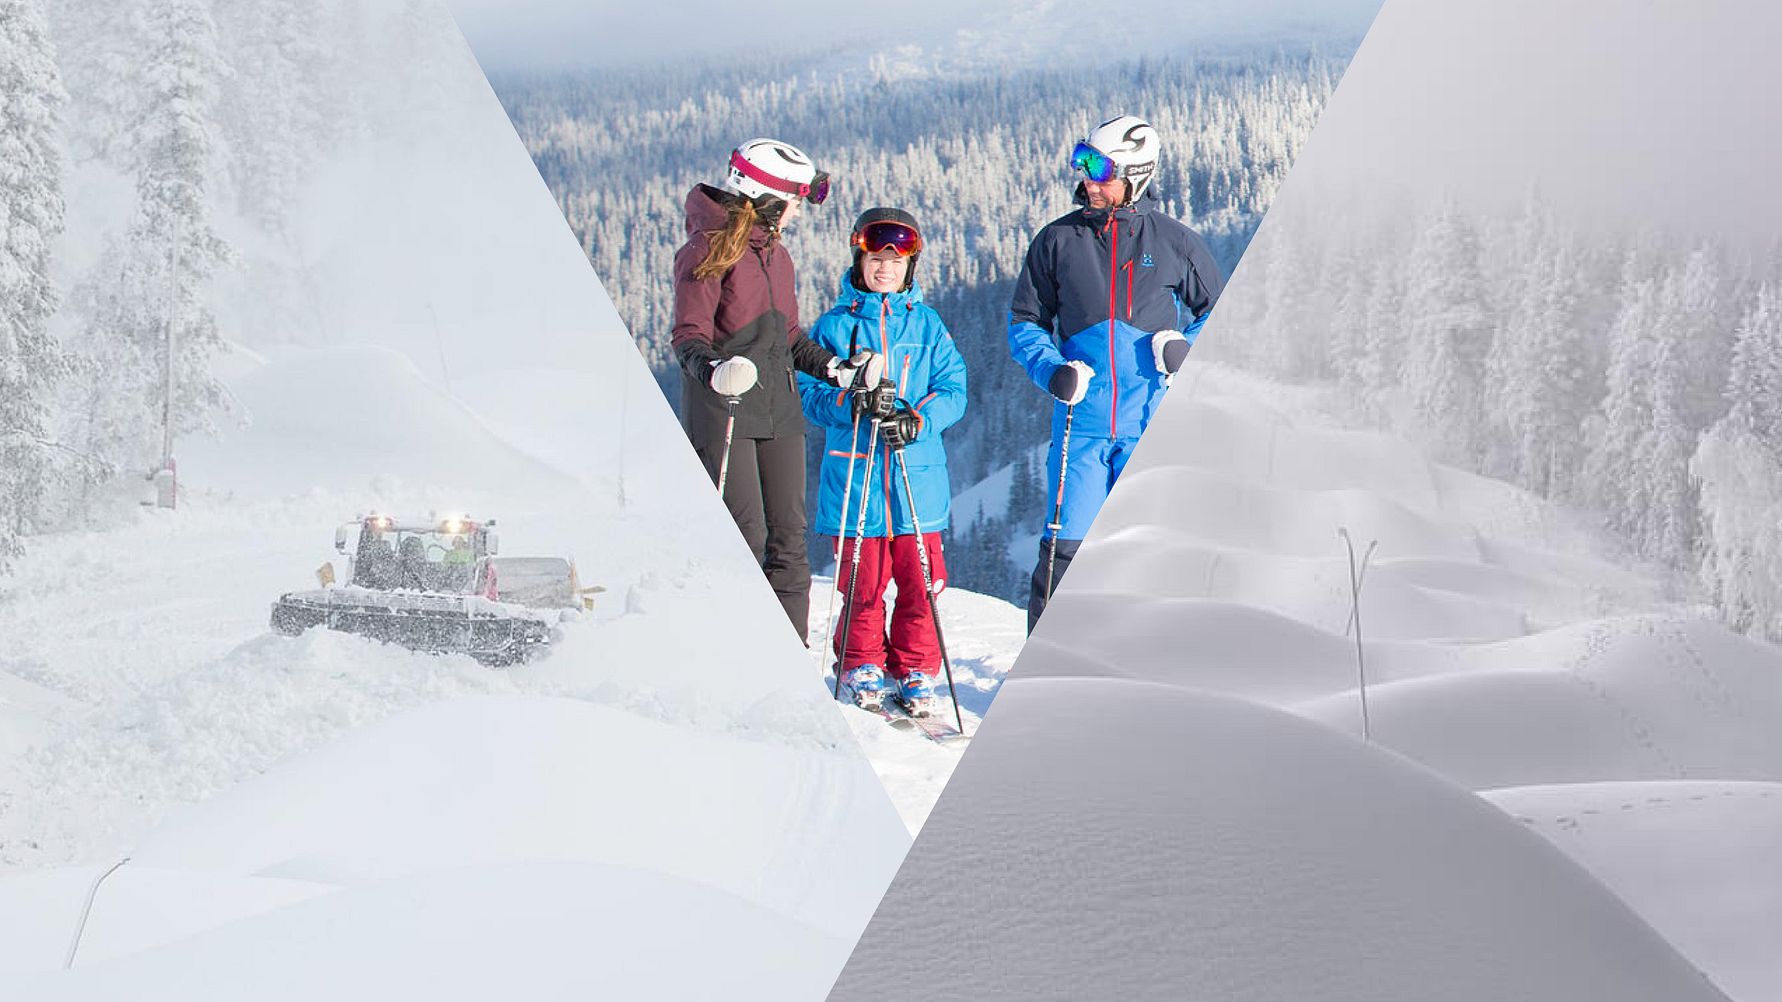 SkiStar’s winter premiere: Sneak opening in Vemdalen this weekend